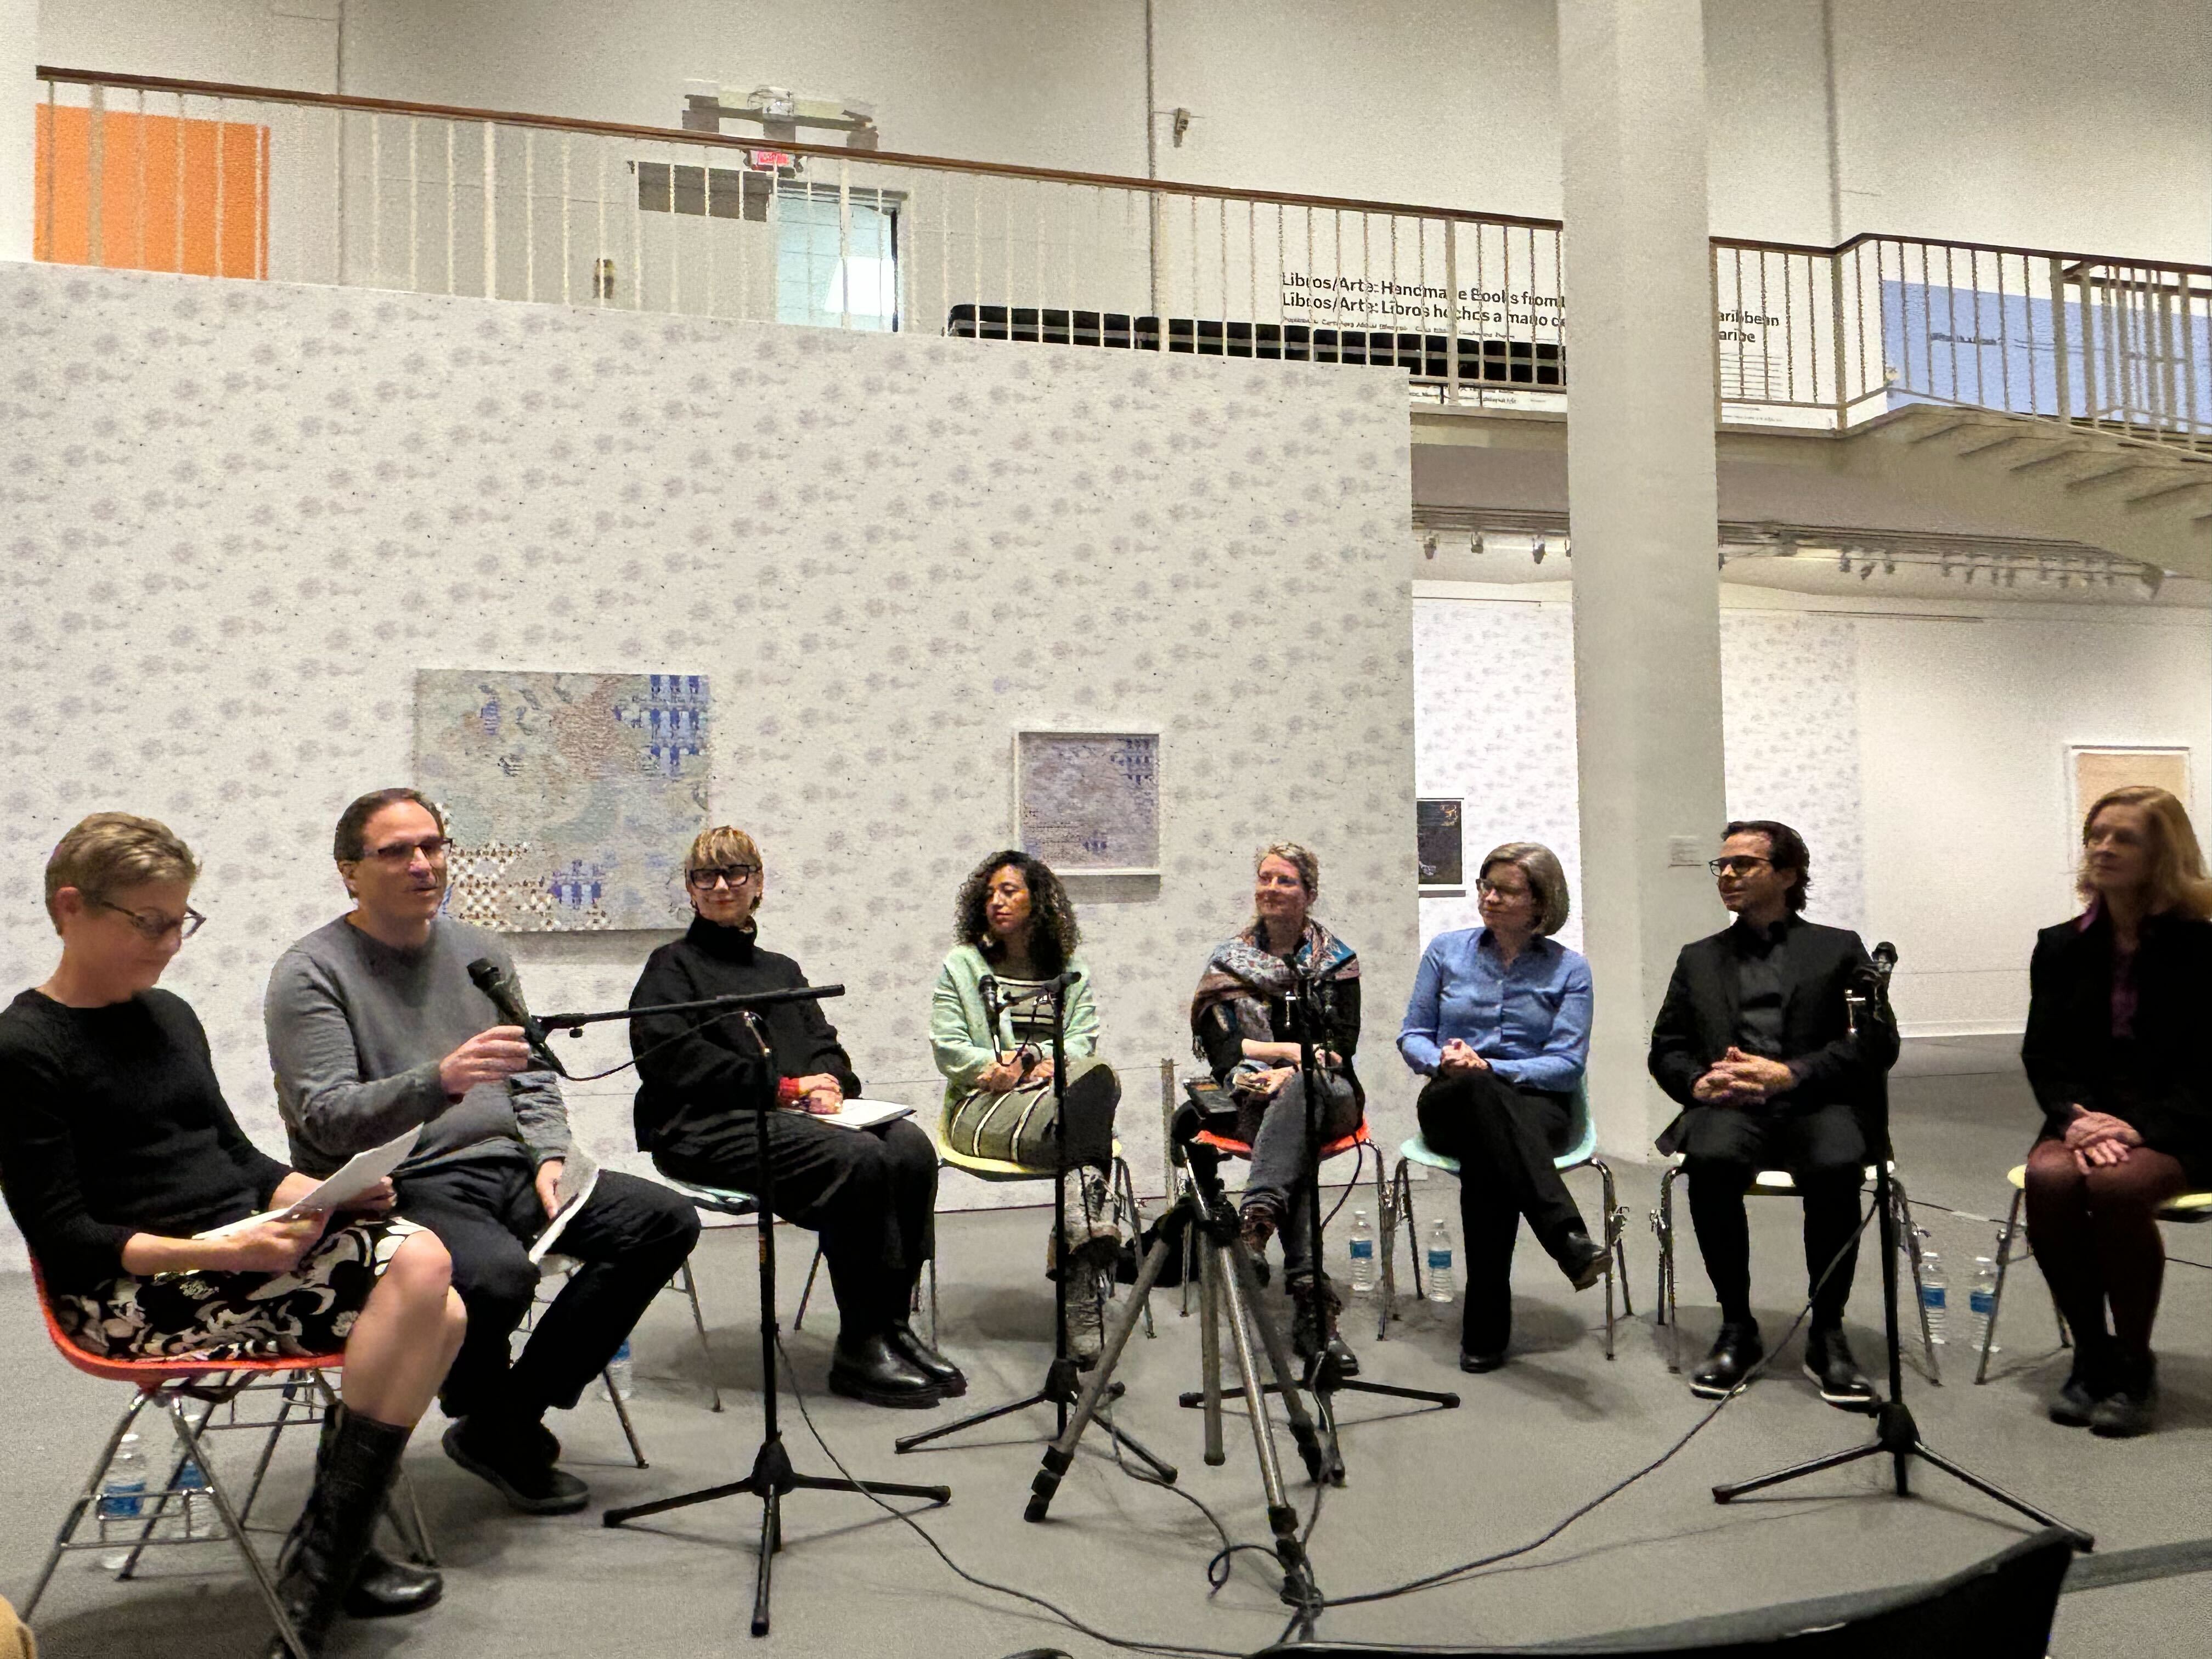 Panel discussion during Libros/Arte